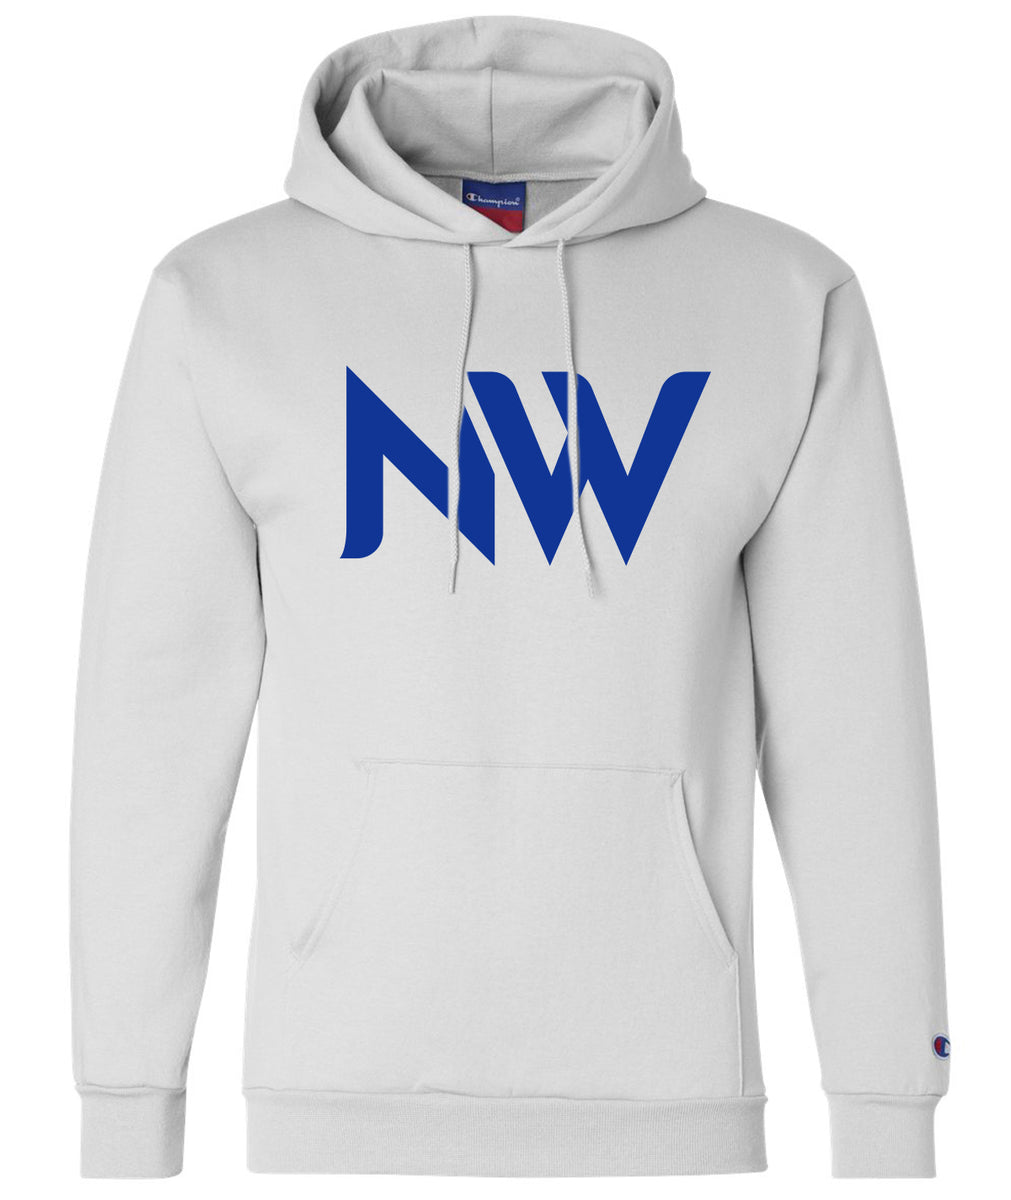 Wolves – Northwest Hooded Letterman Sweatshirt Customizable Champion Locker